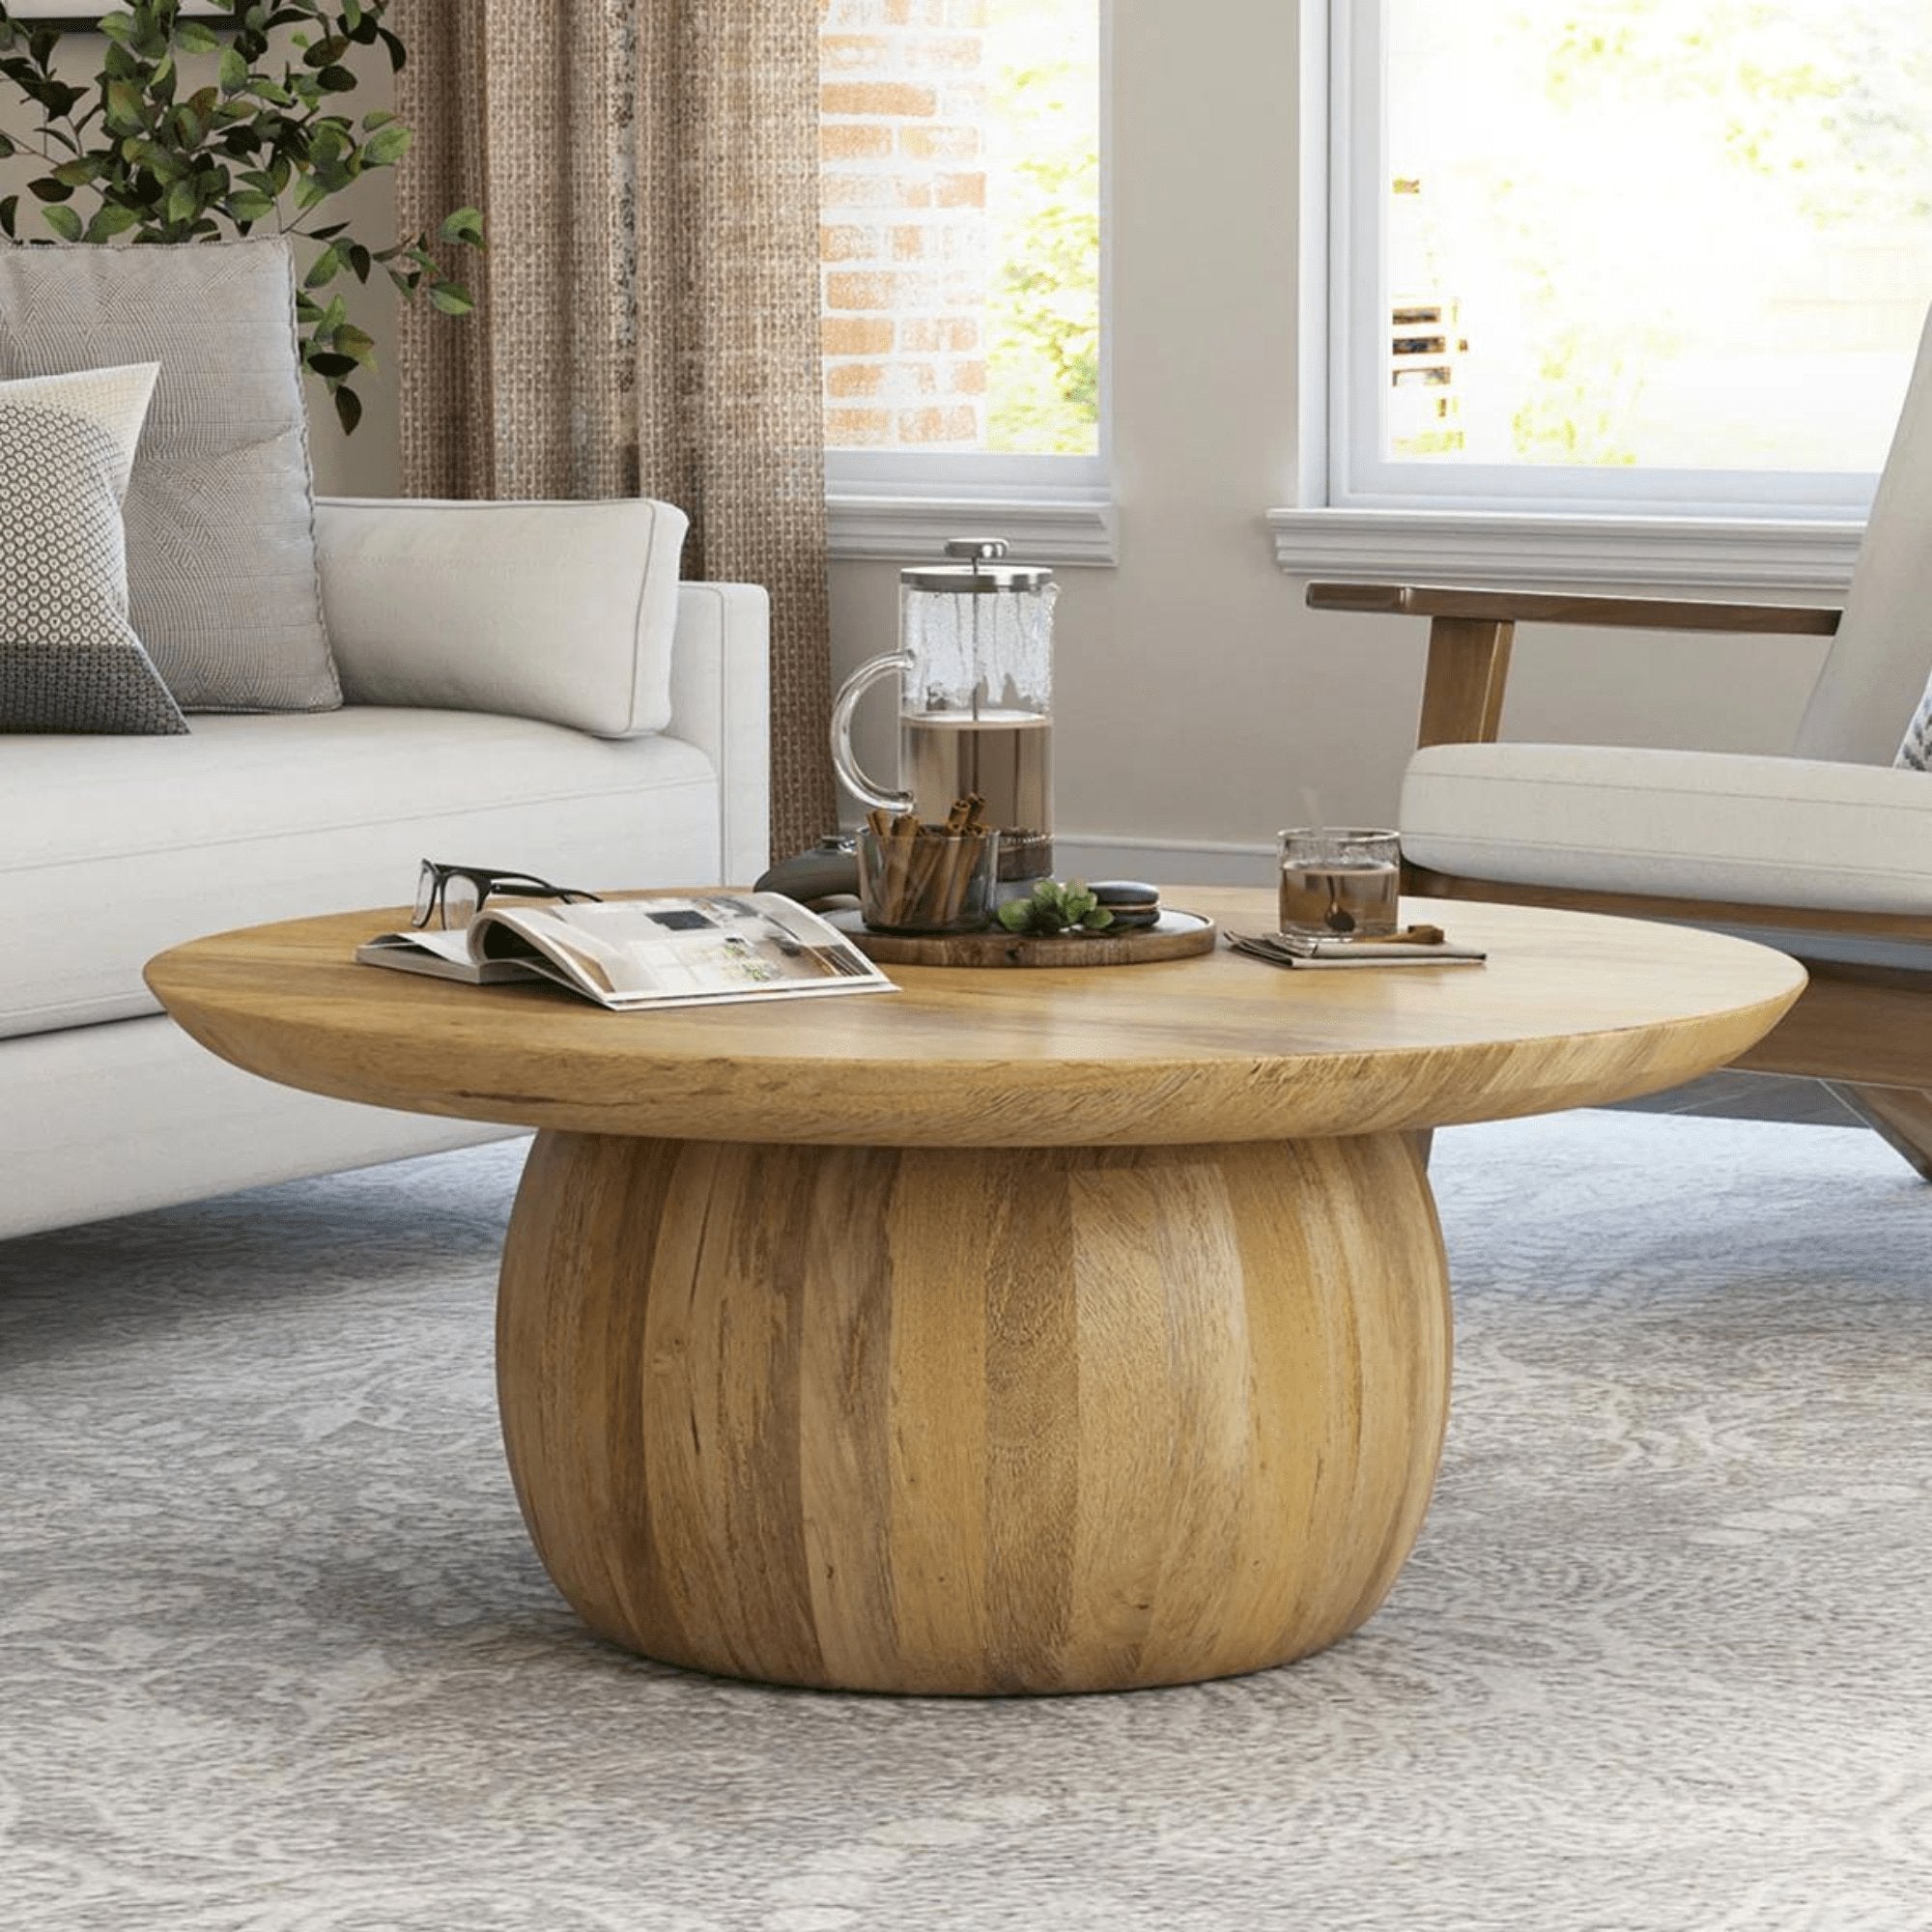 Center table for living room